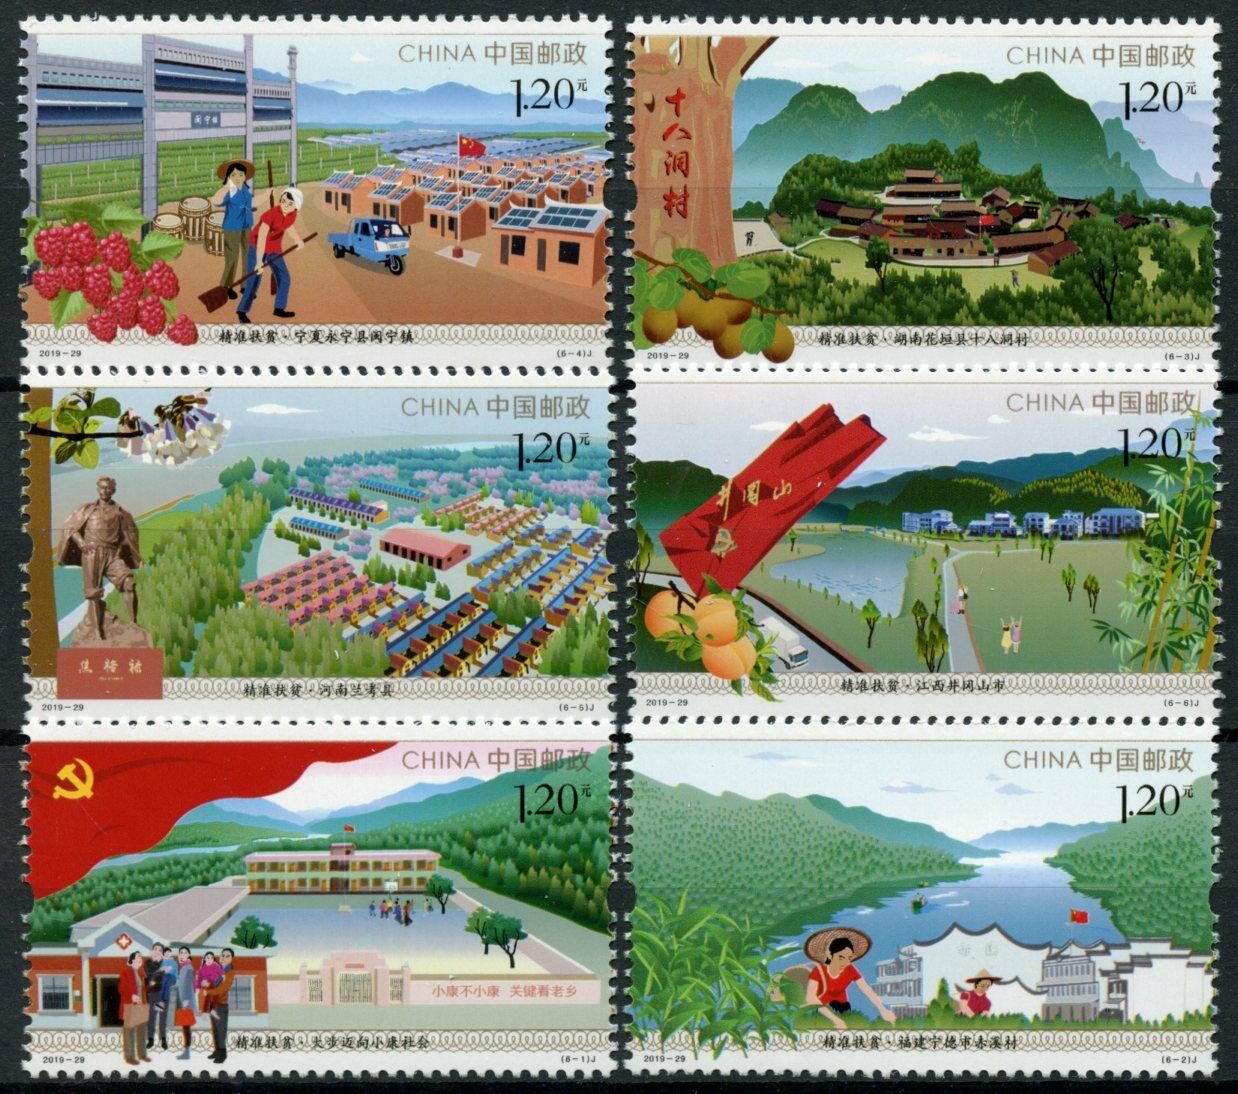 China Stamps 2019 MNH Alleviating Poverty Landscapes Flags Fruits Nature 6v Set